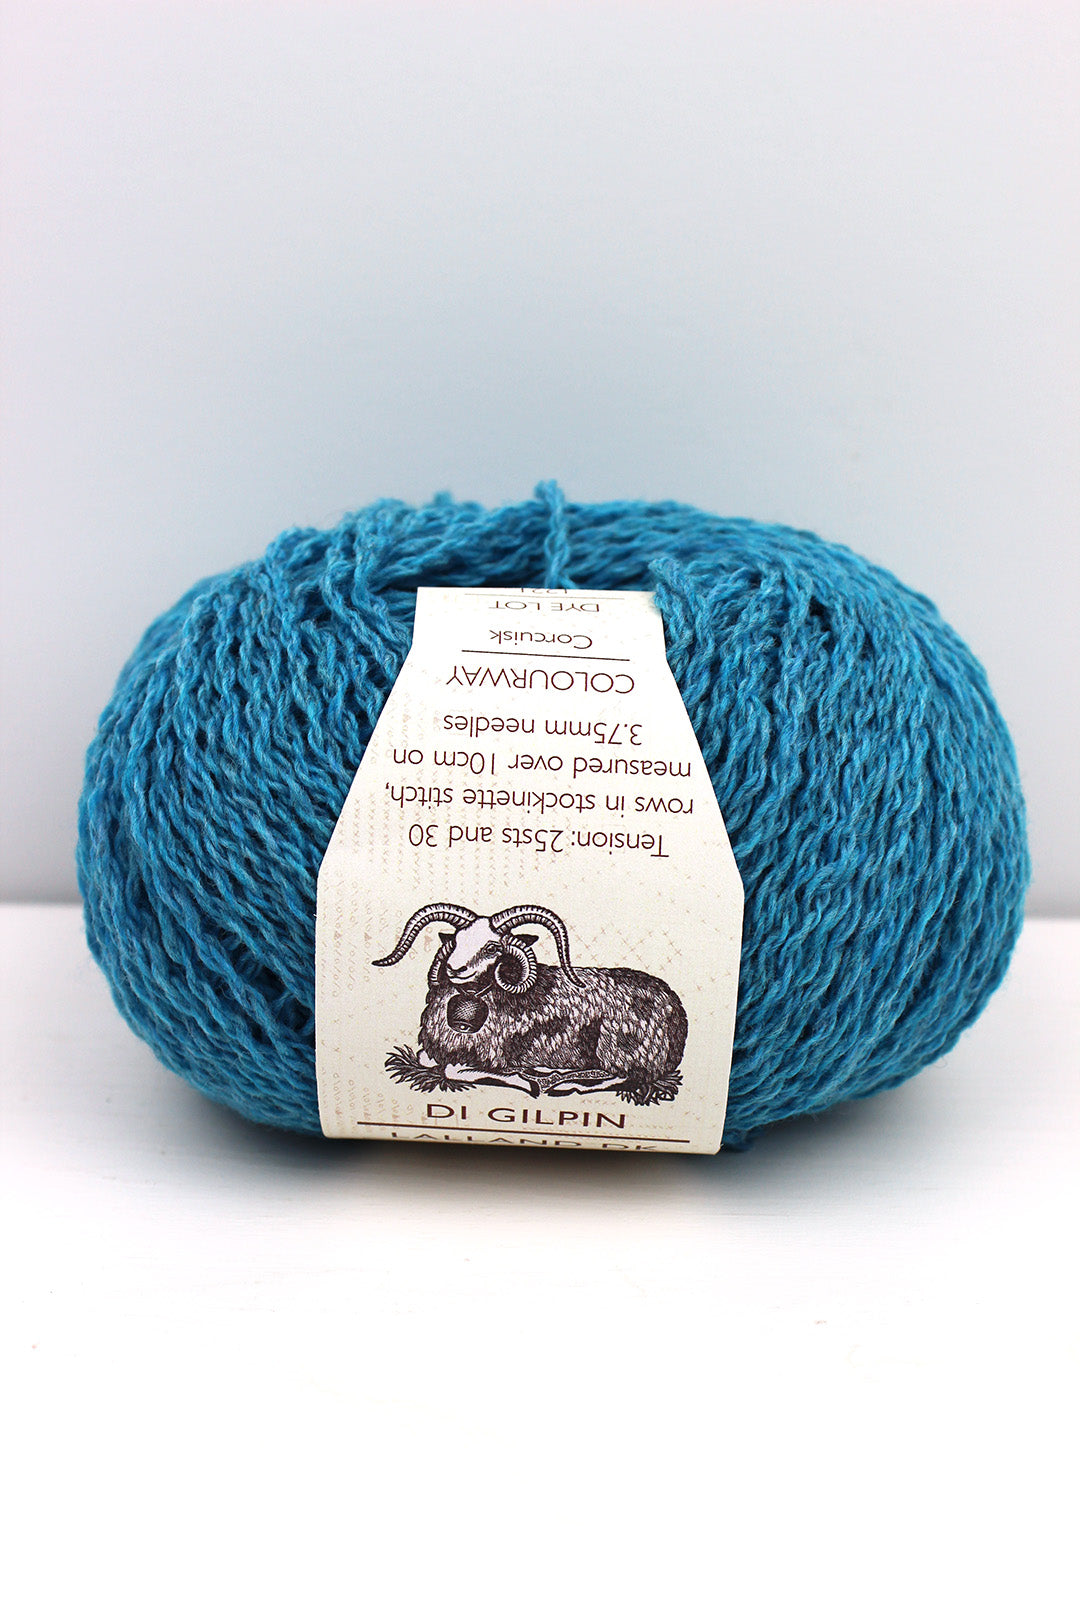 Di Gilpin yarn in colour Coruisk. Scottish Textiles Showcase